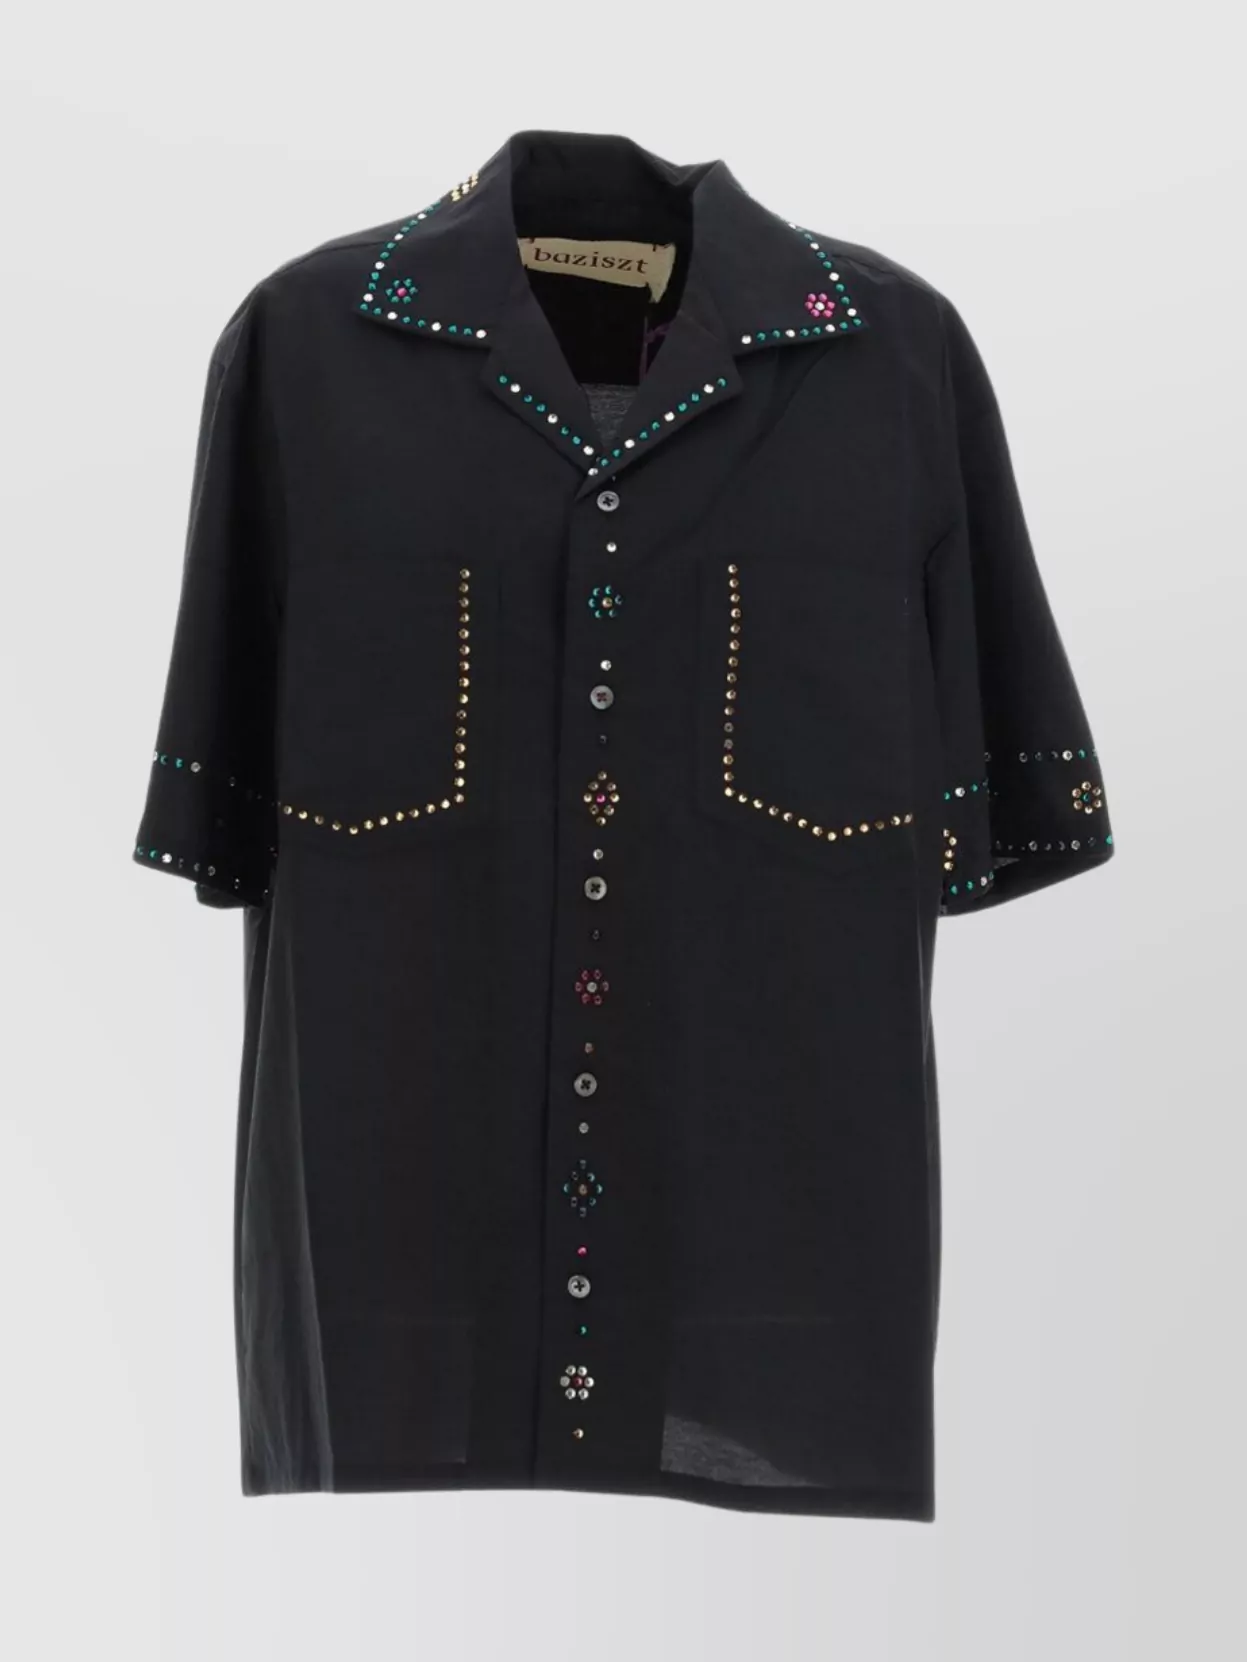 Baziszt Embellished Collar Cuffs Pockets Short Sleeves Shirt In Black